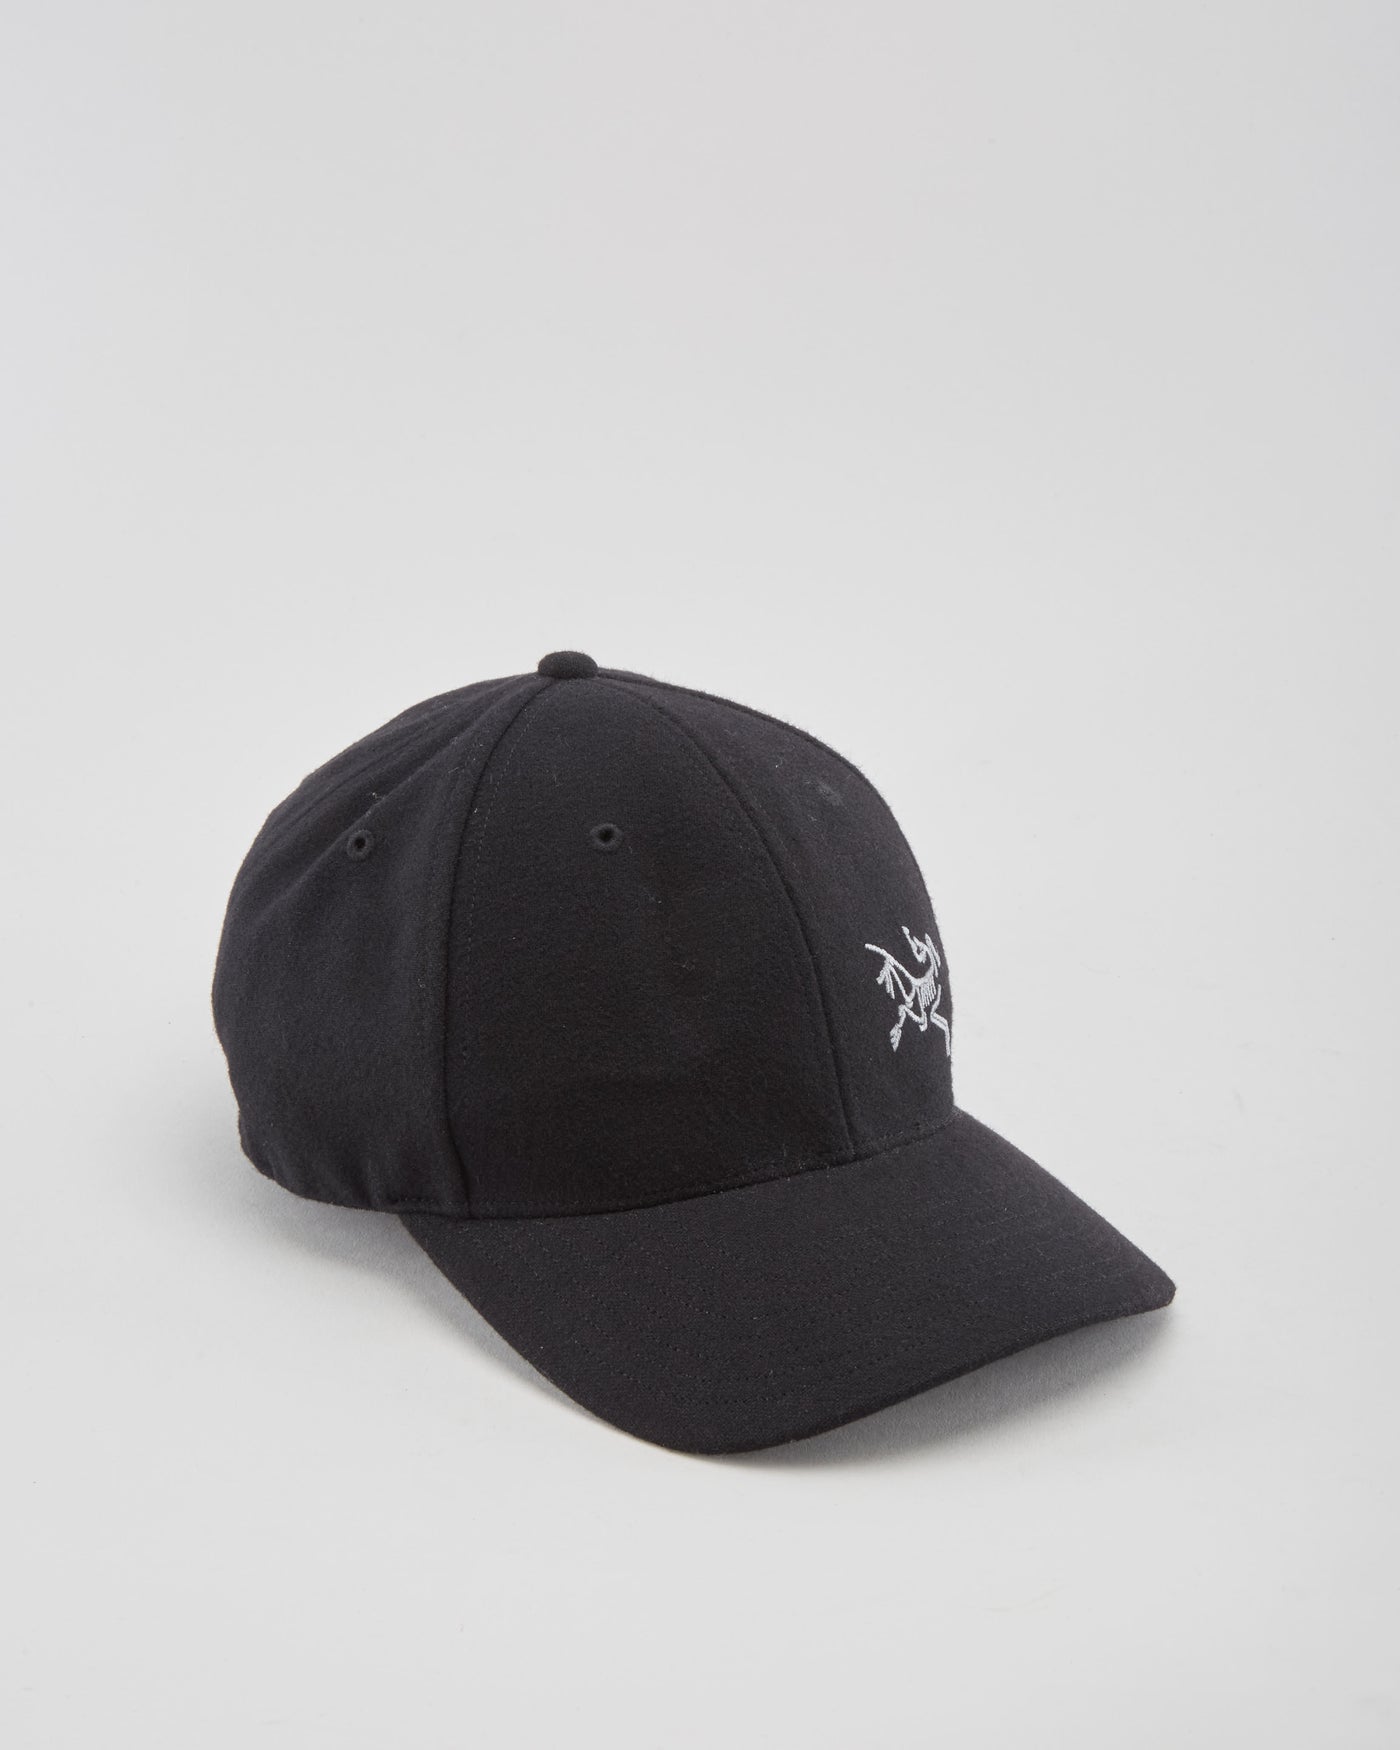 Arc'teryx Black Baseball Cap